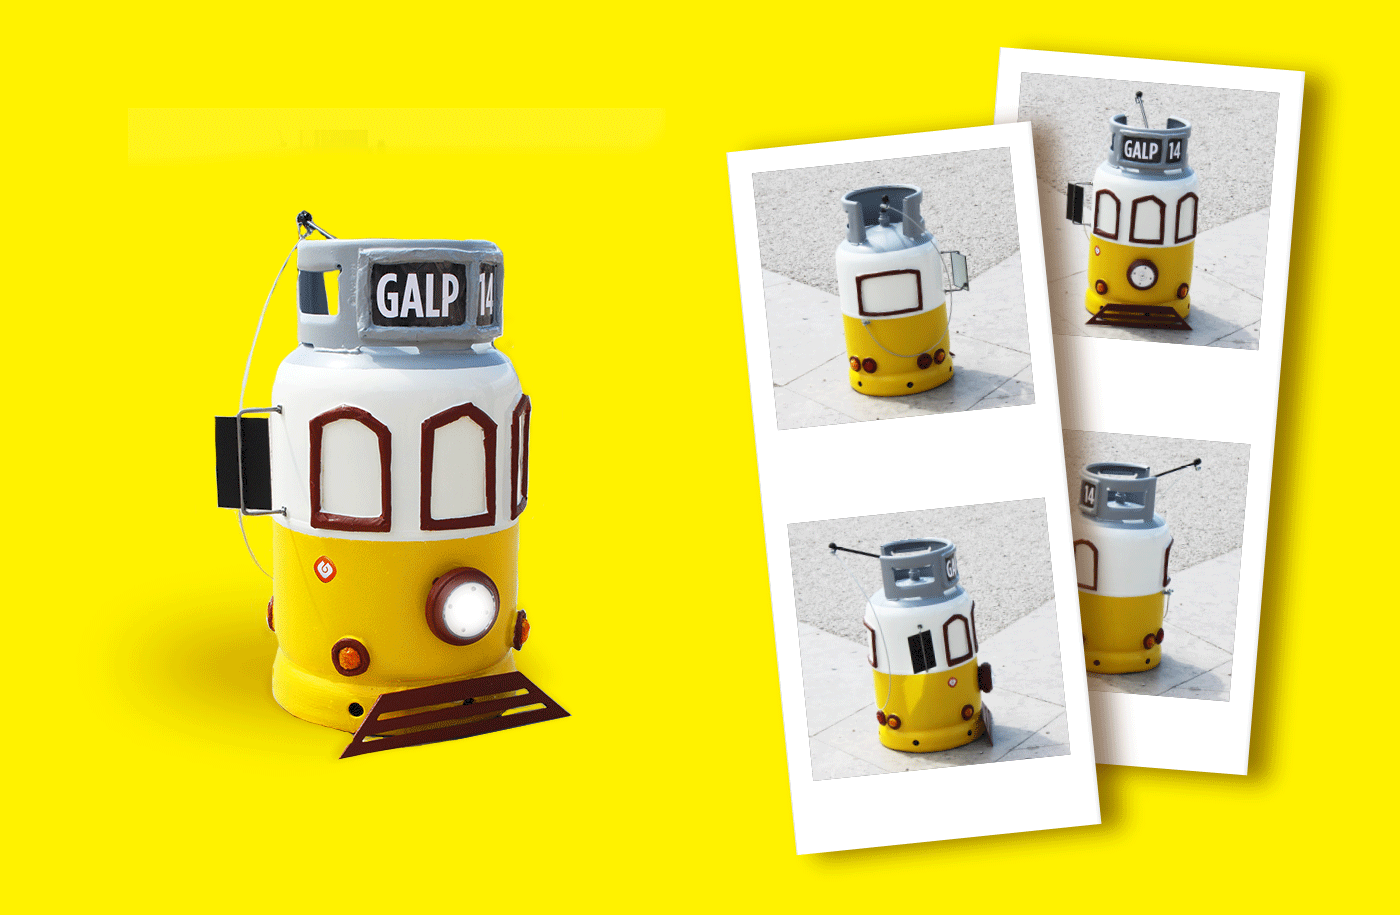 galp design electrico amarelo lisboa Turismo icons contest award Portugal tram Galp Create yellow Lisbon symbol